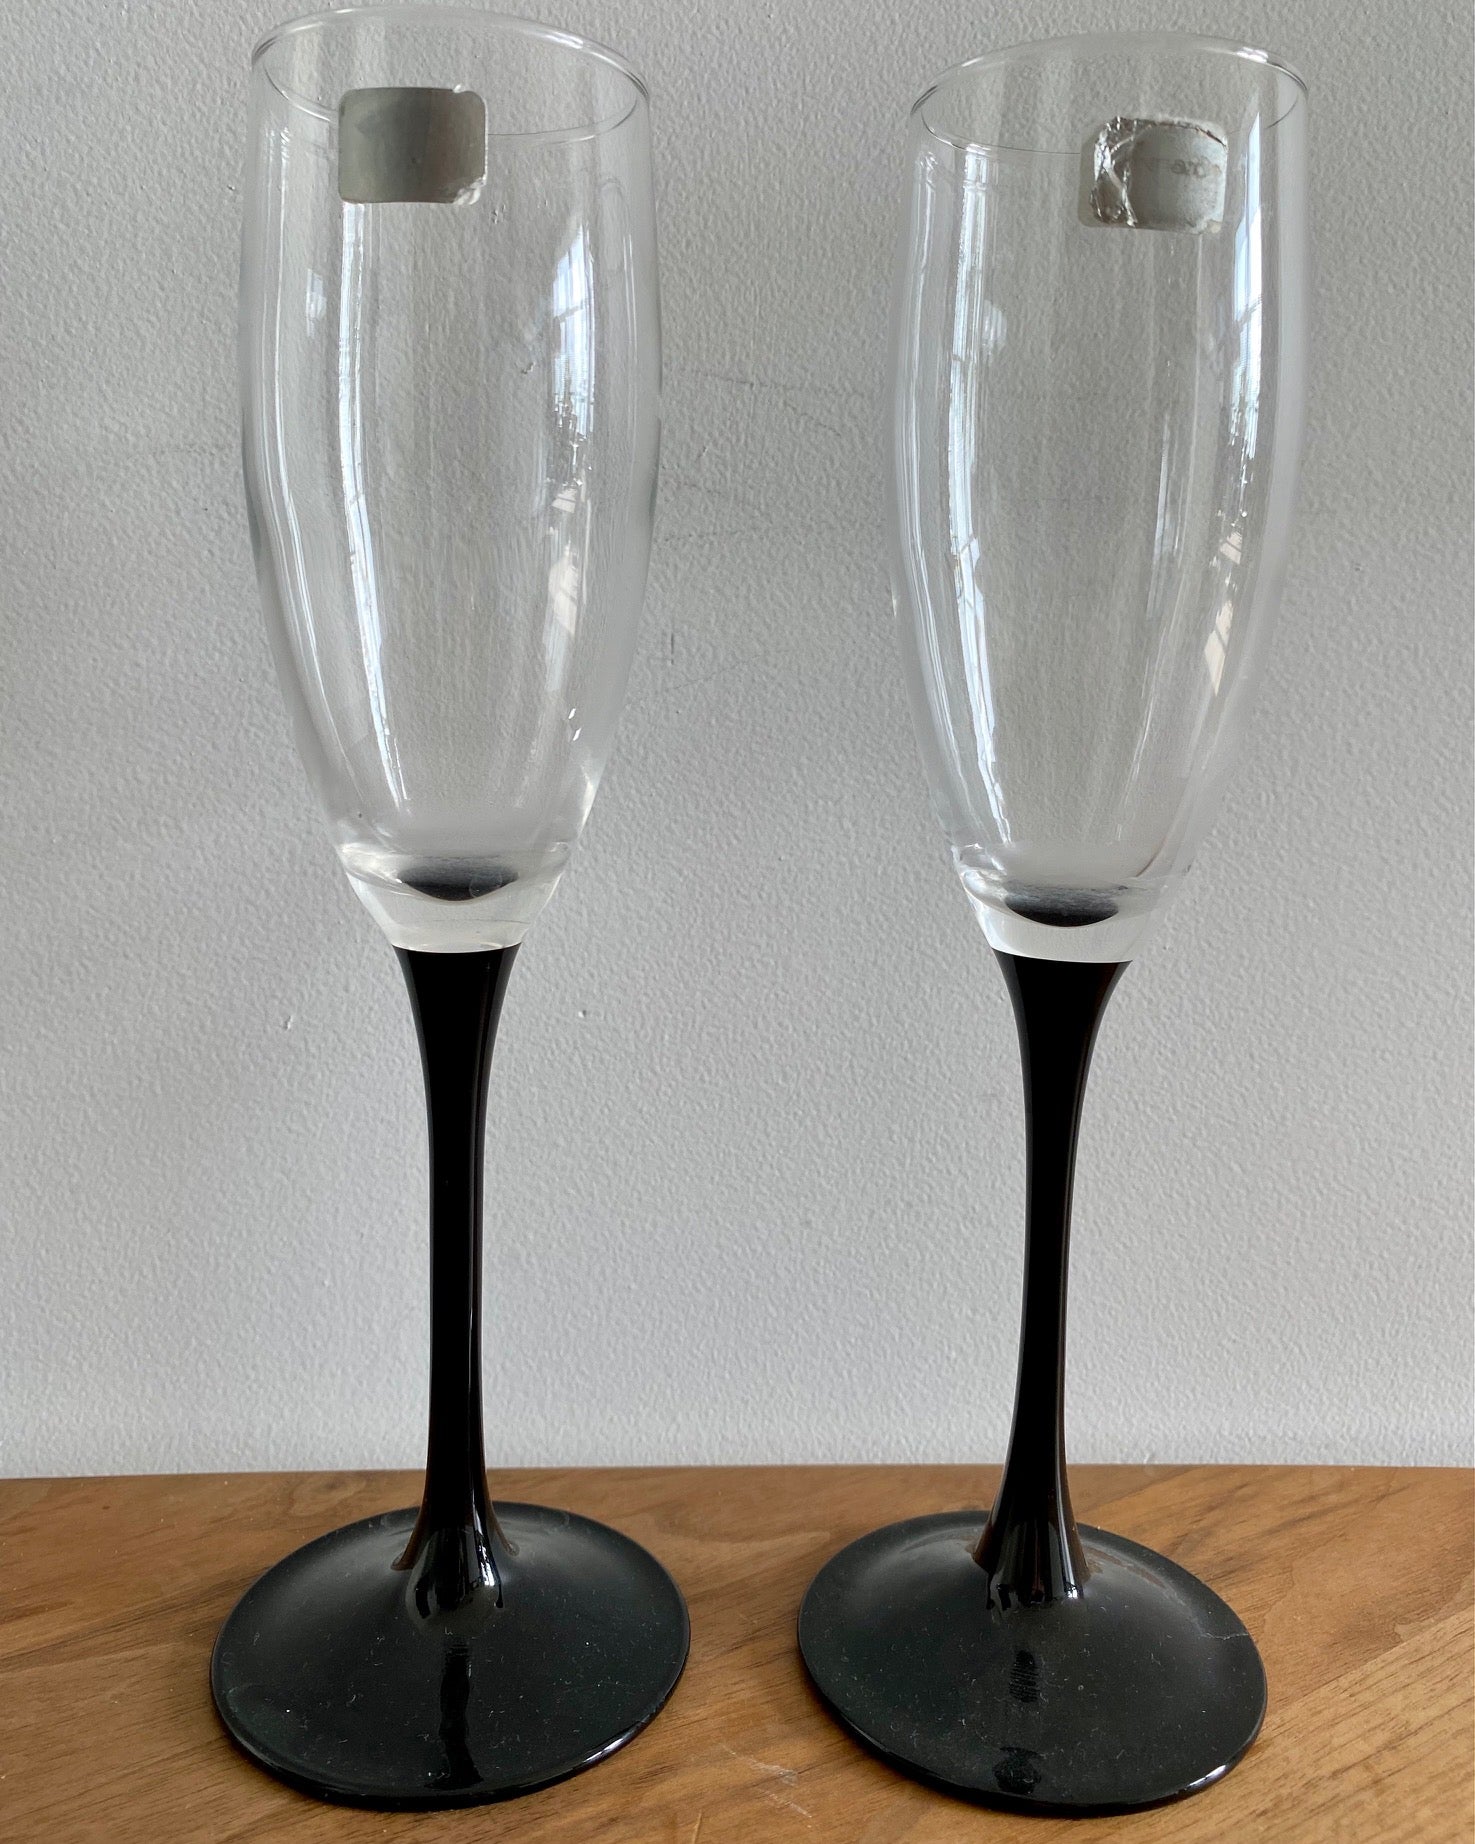 Champagne glasses Luminarc black stem set of 2